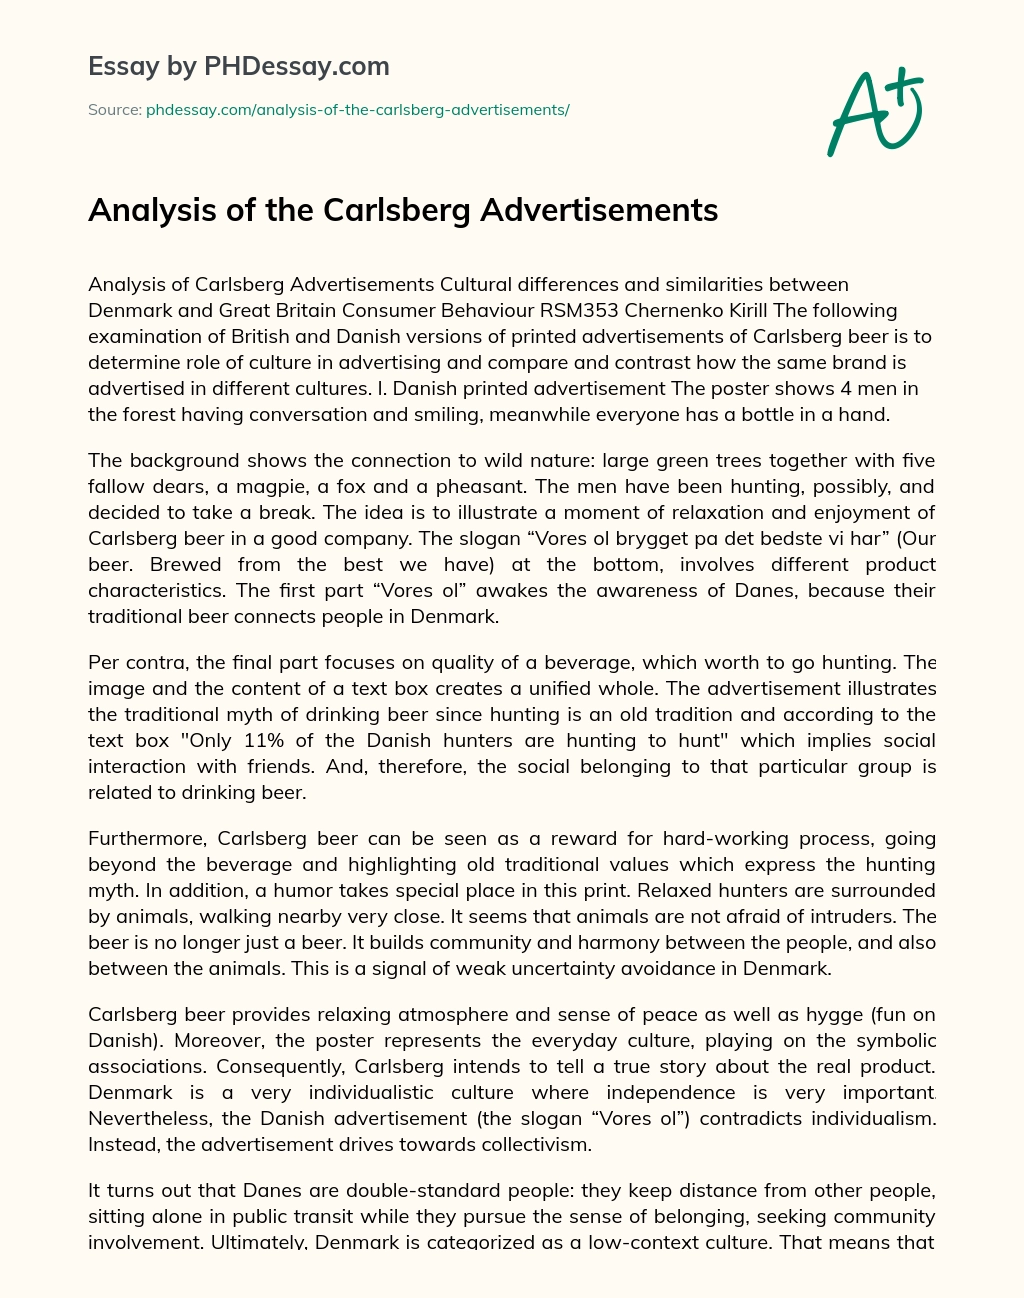 Analysis of the Carlsberg Advertisements essay